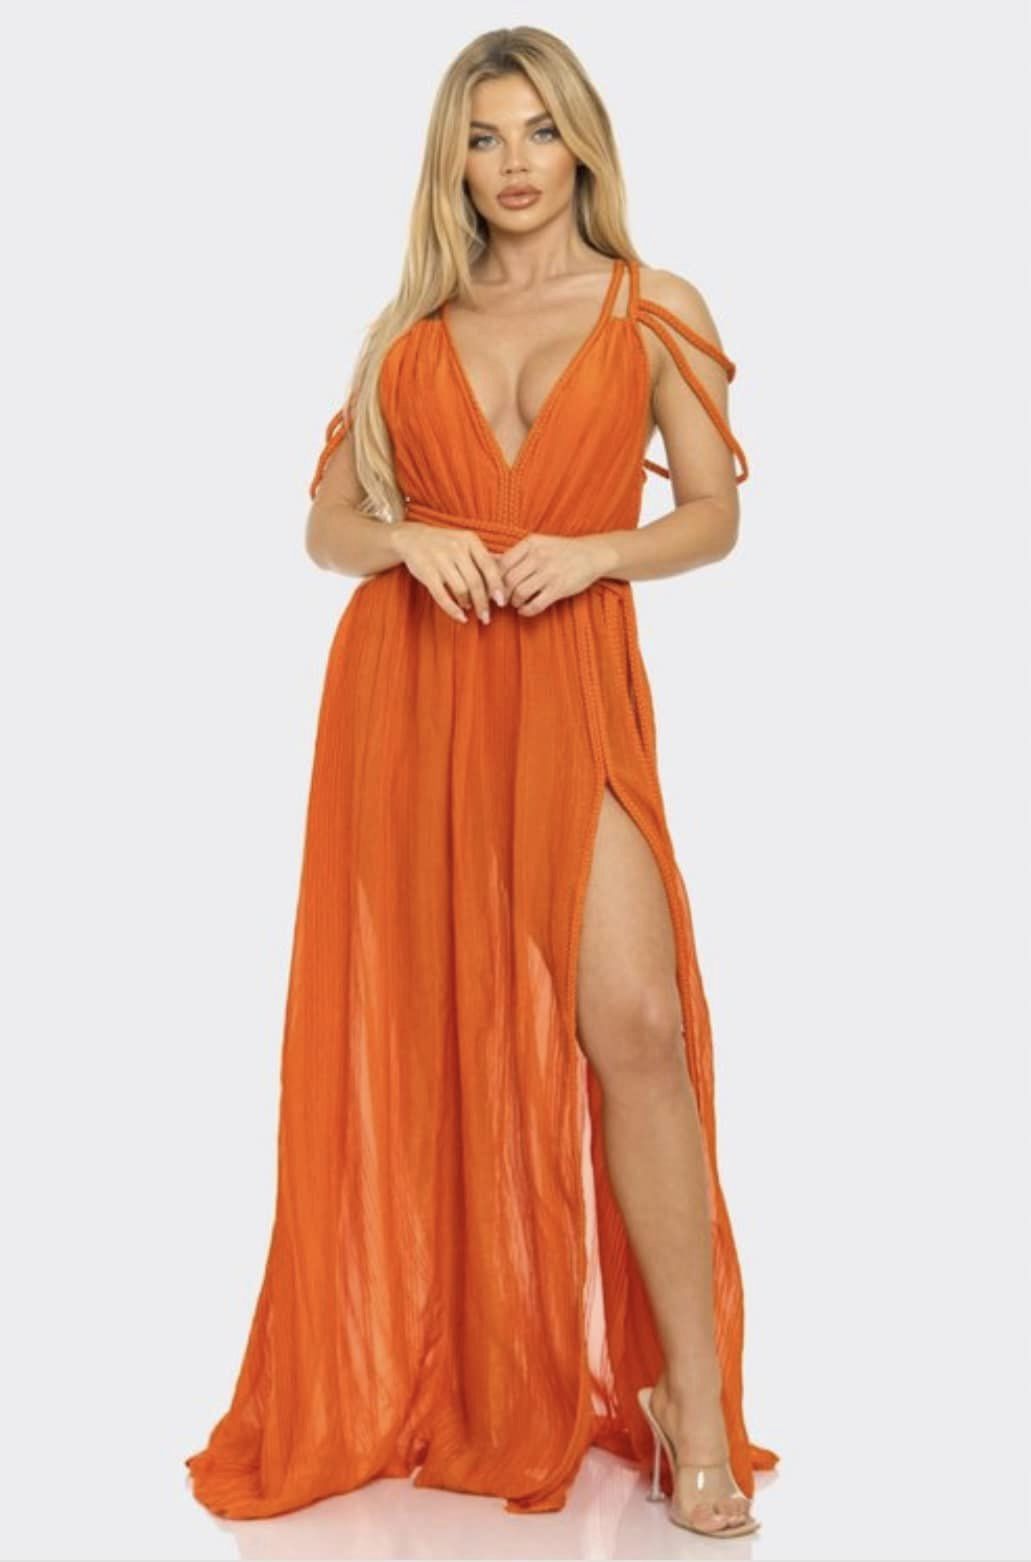 The Orange Godess Dress - On the Runway Fashion